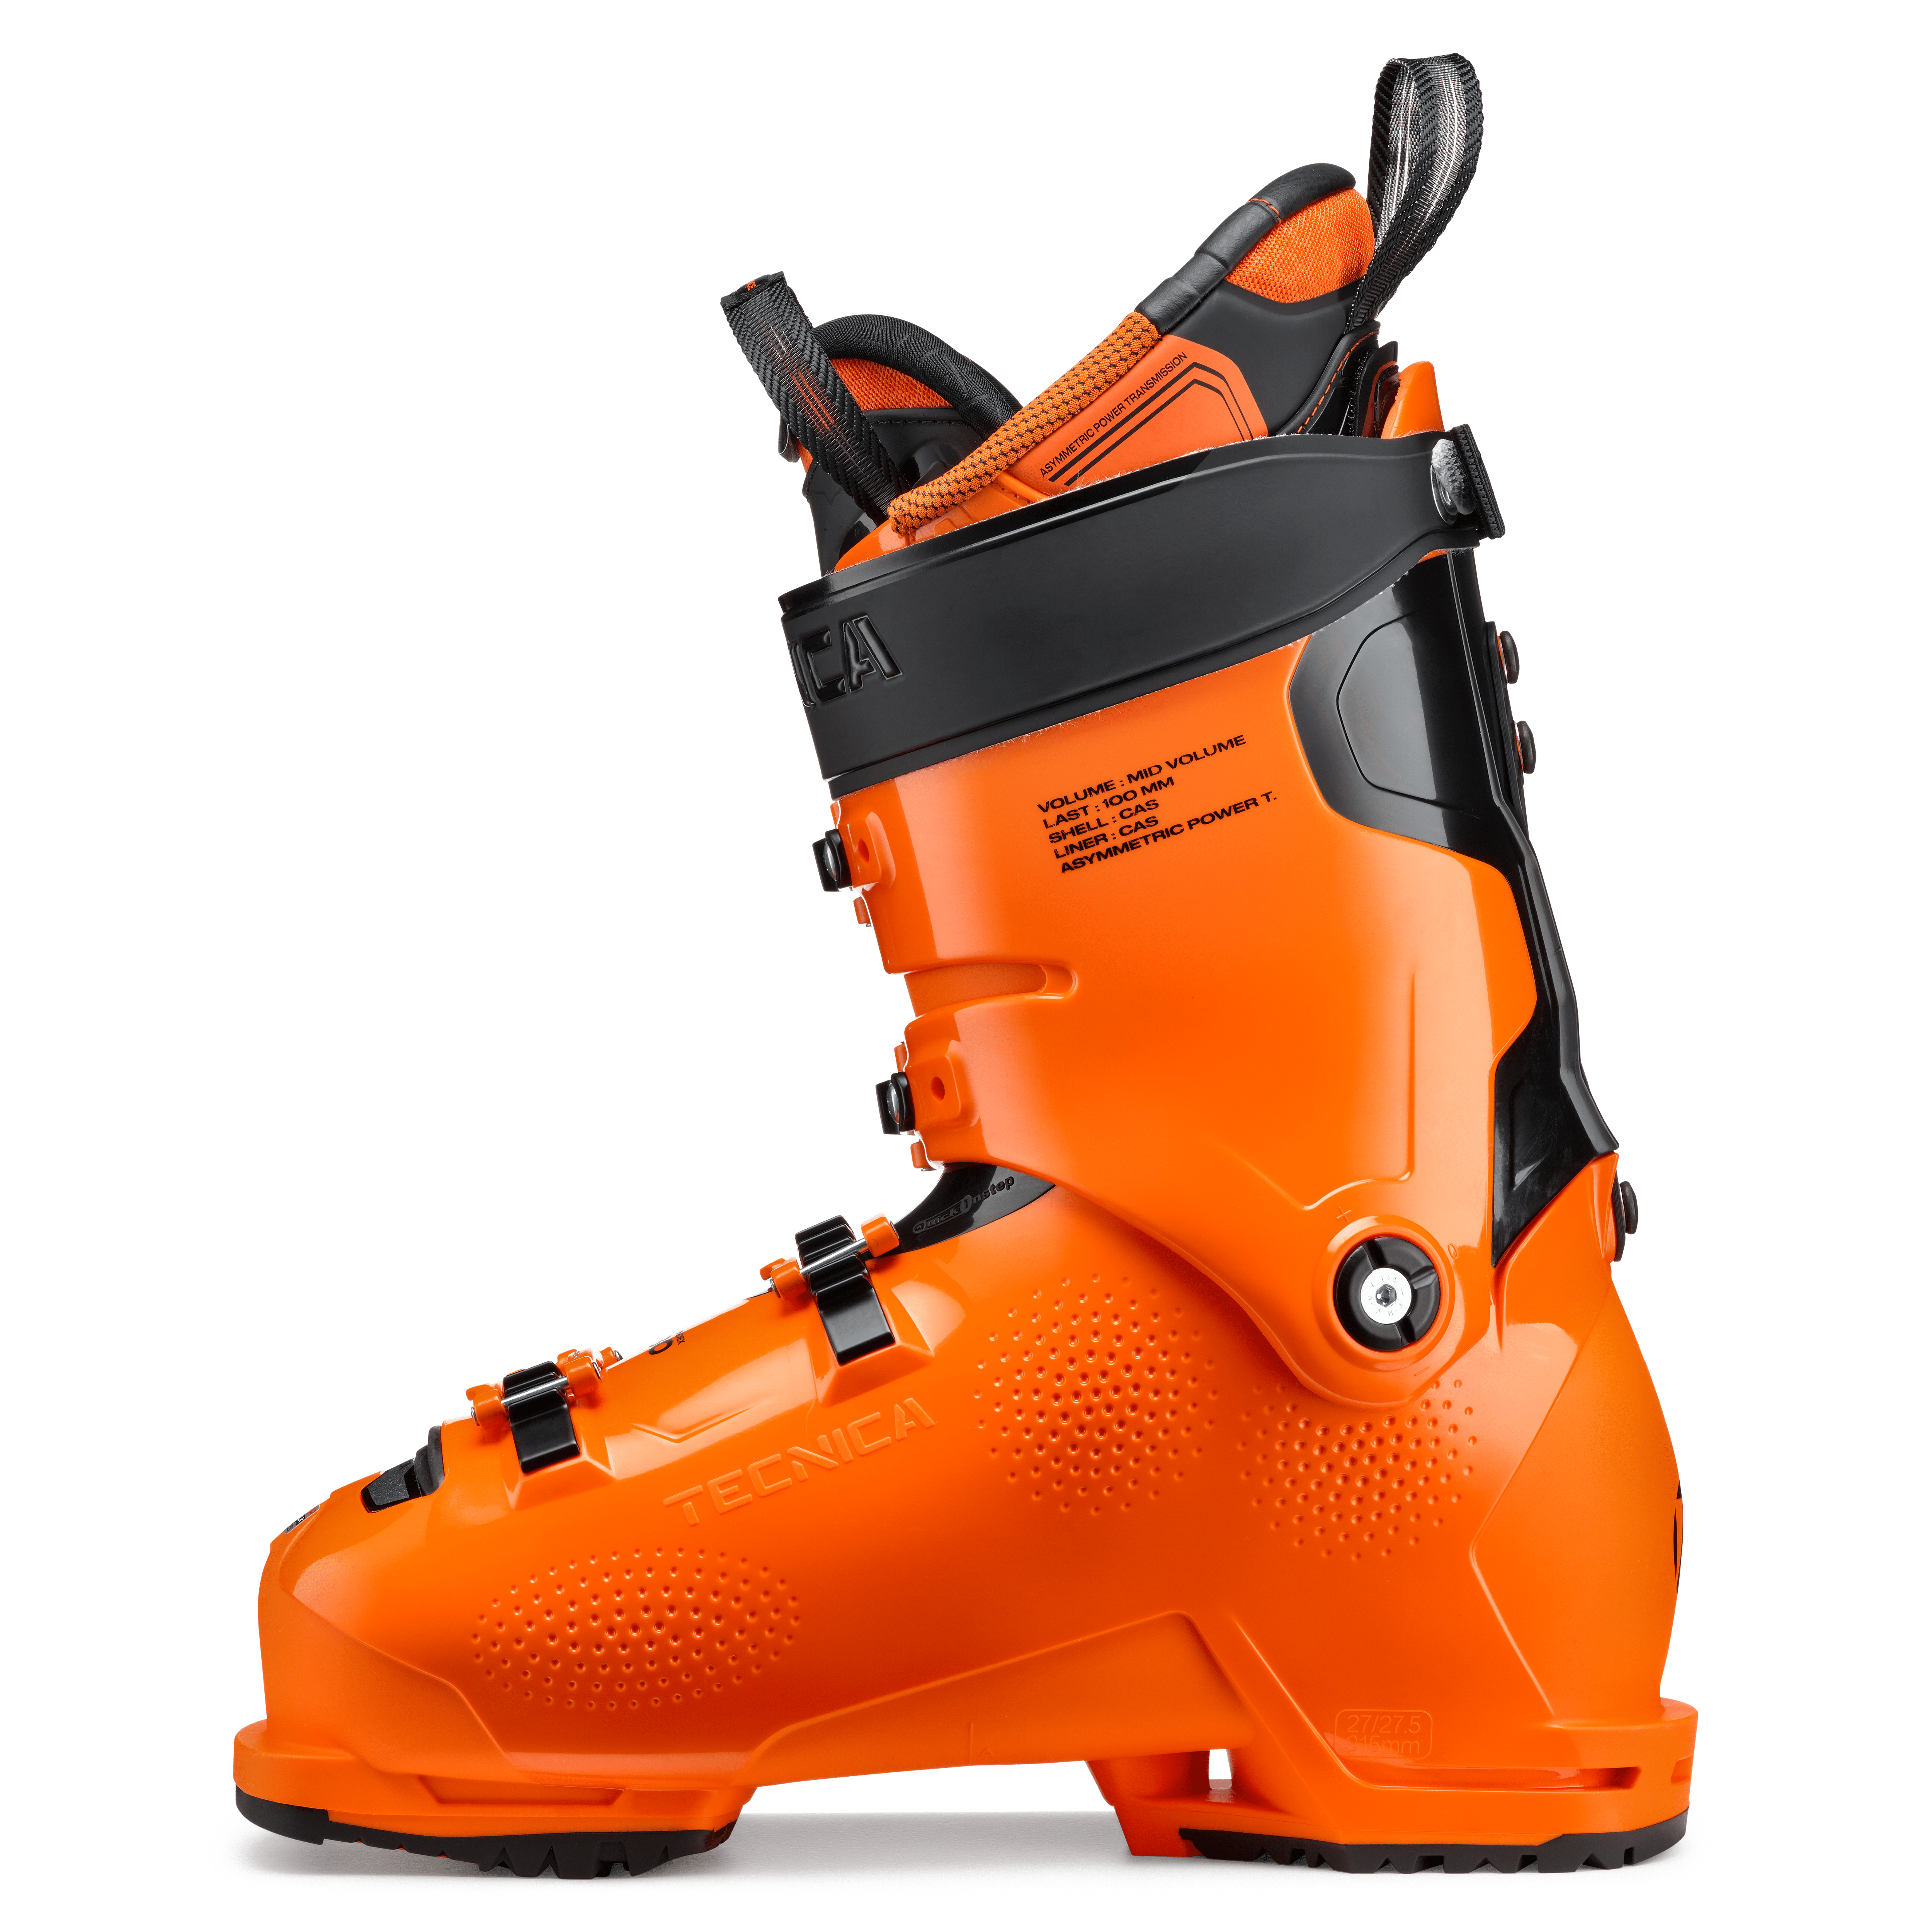 Tecnica Mach1 MV 120 Ski Boots 2024